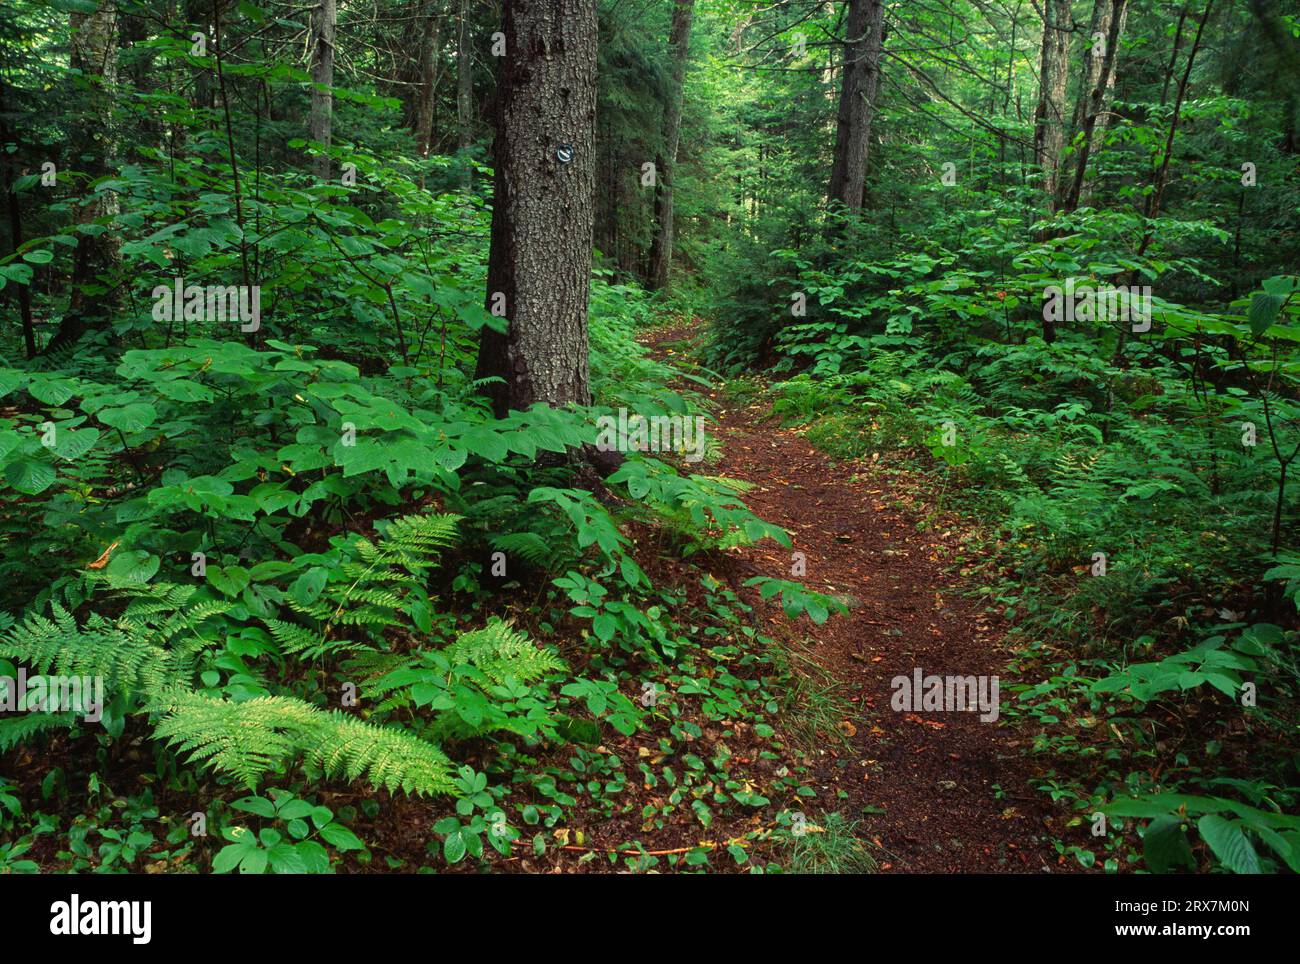 Northville-Placid Trail, West Canada Lake Wilderness Area, Adirondack Park, New York Stock Photo